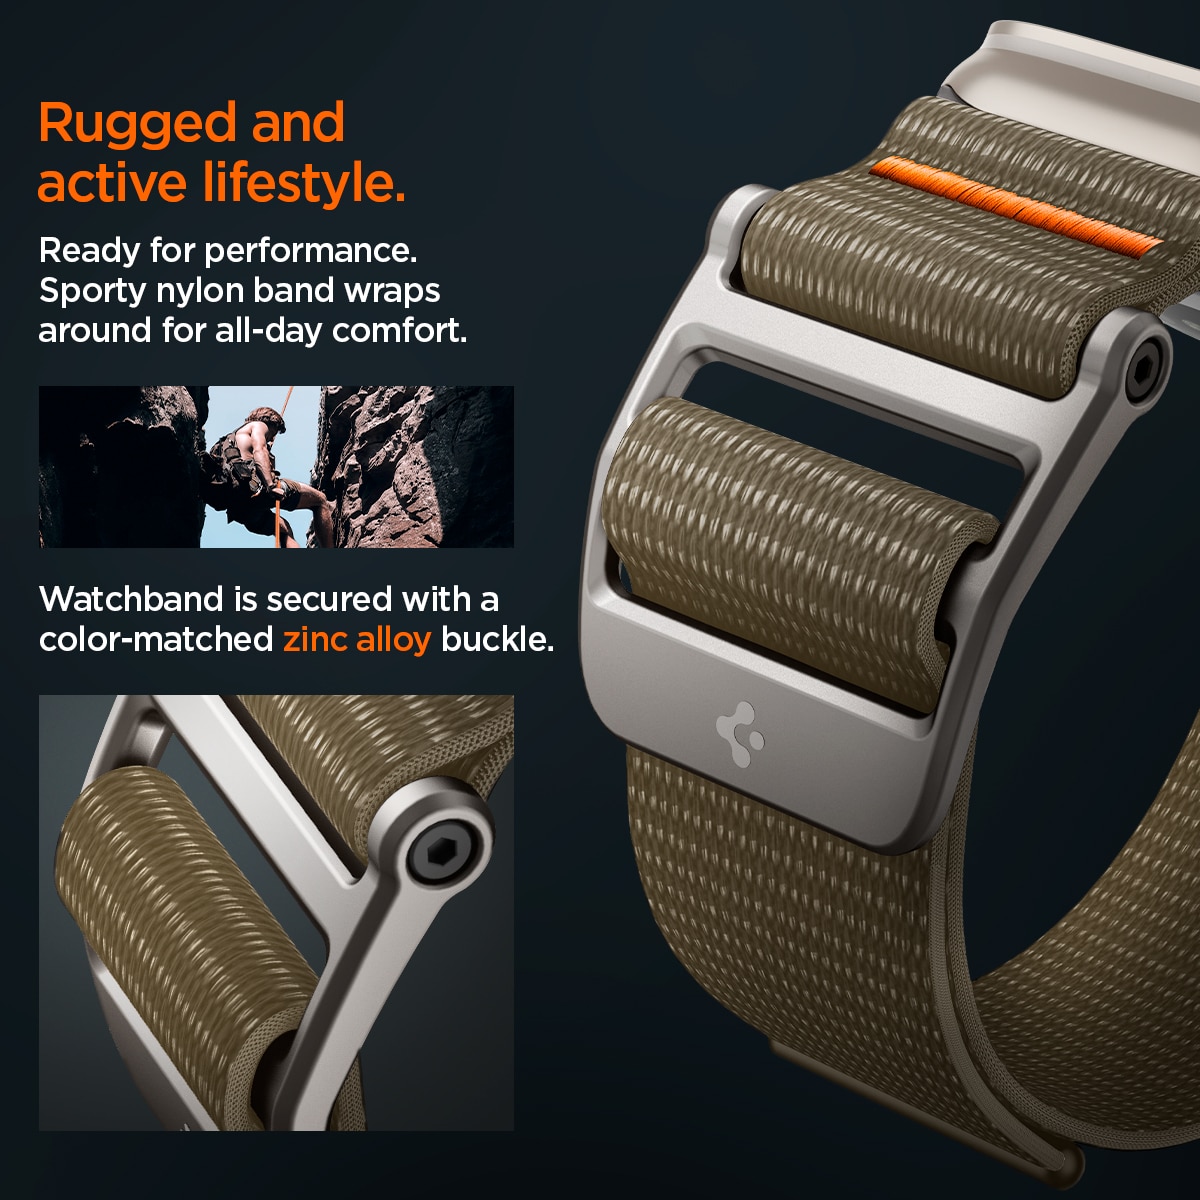 DuraPro Flex Ultra Apple Watch 45mm Series 9 Khaki